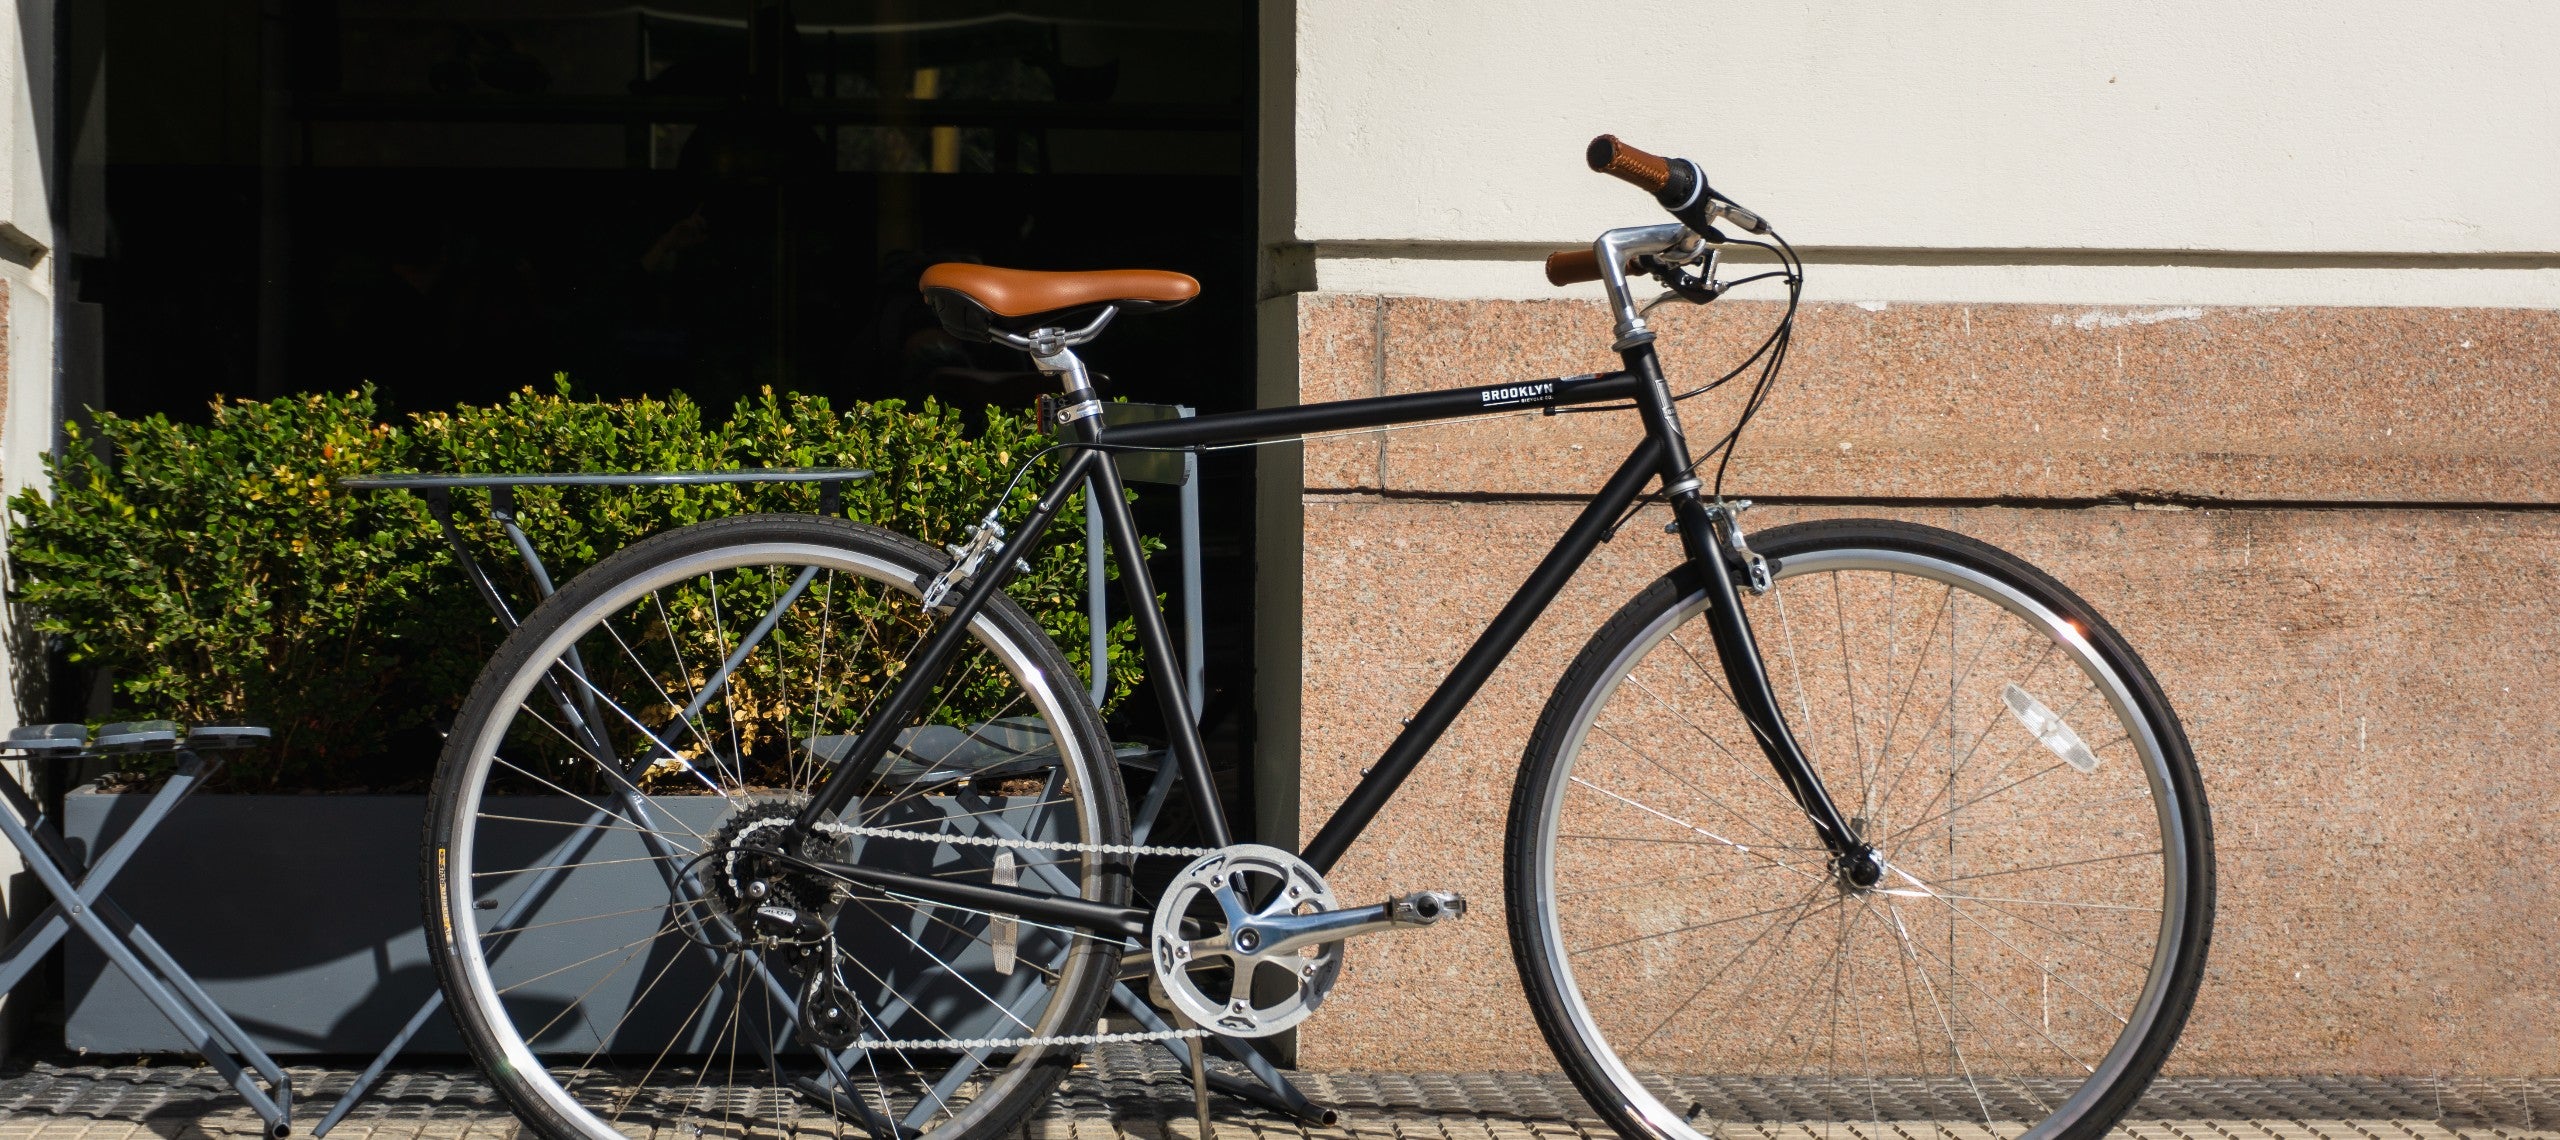 Black diamond frame bicycle with brown saddle and grips